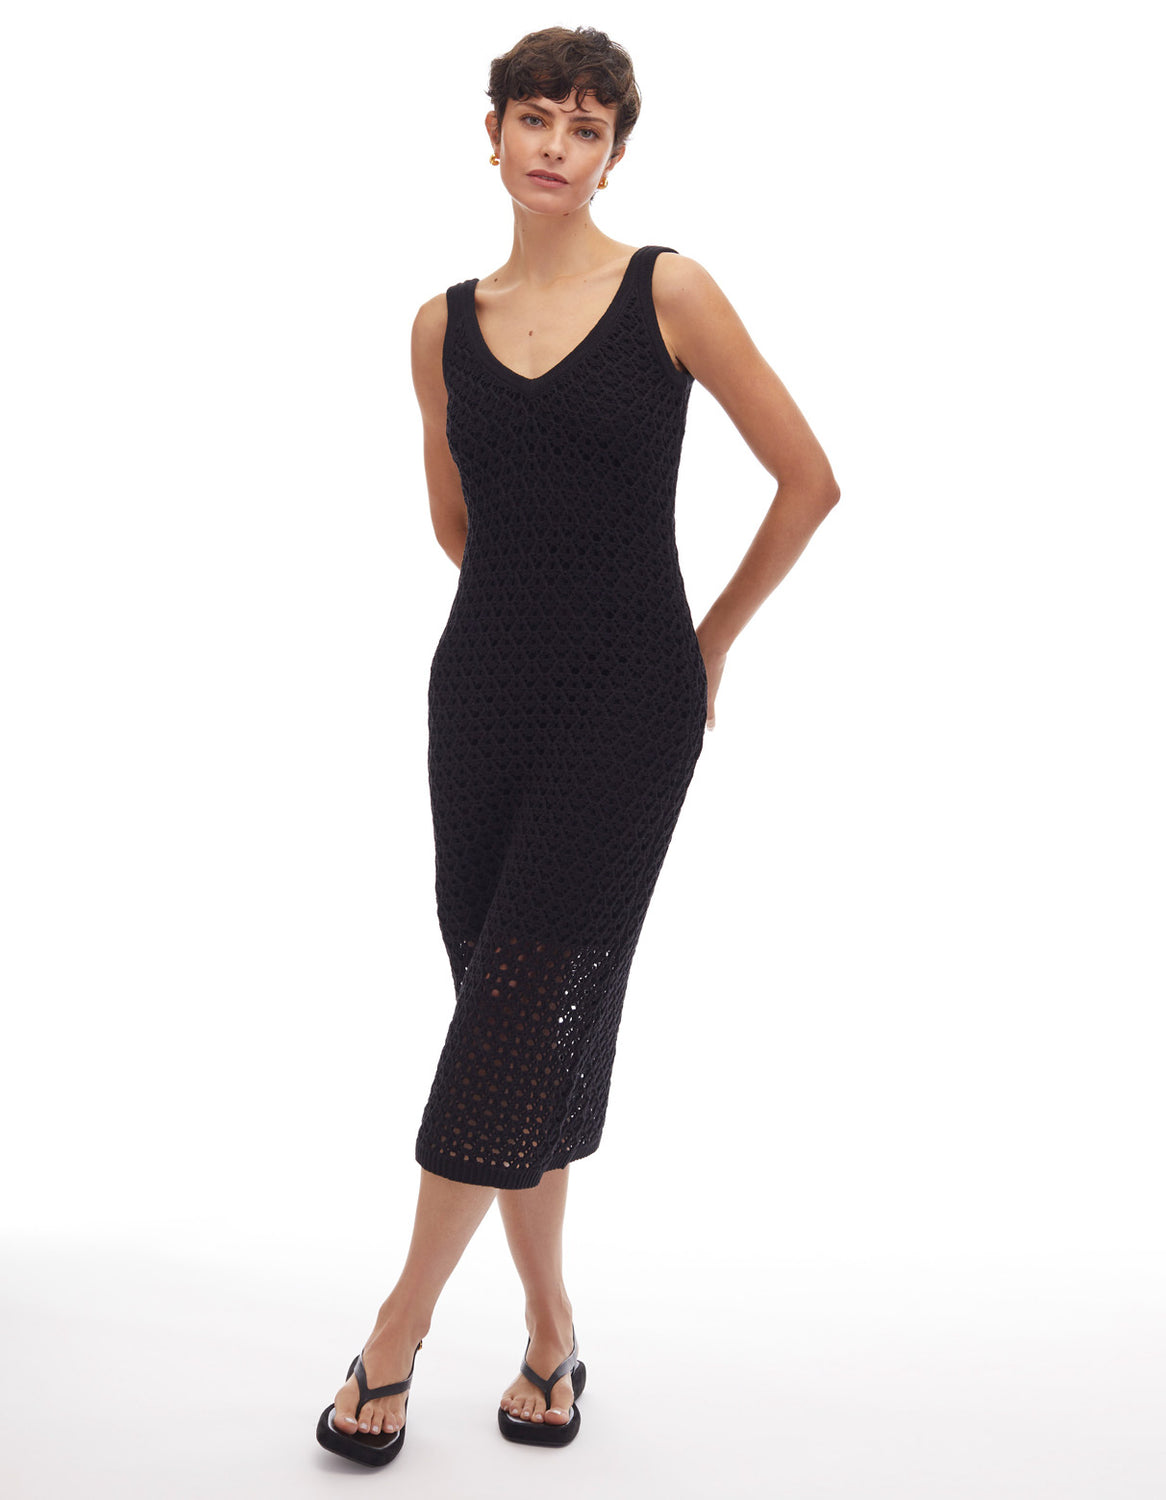 Look 3 - Maddie Crochet V-Neck Tank Dress